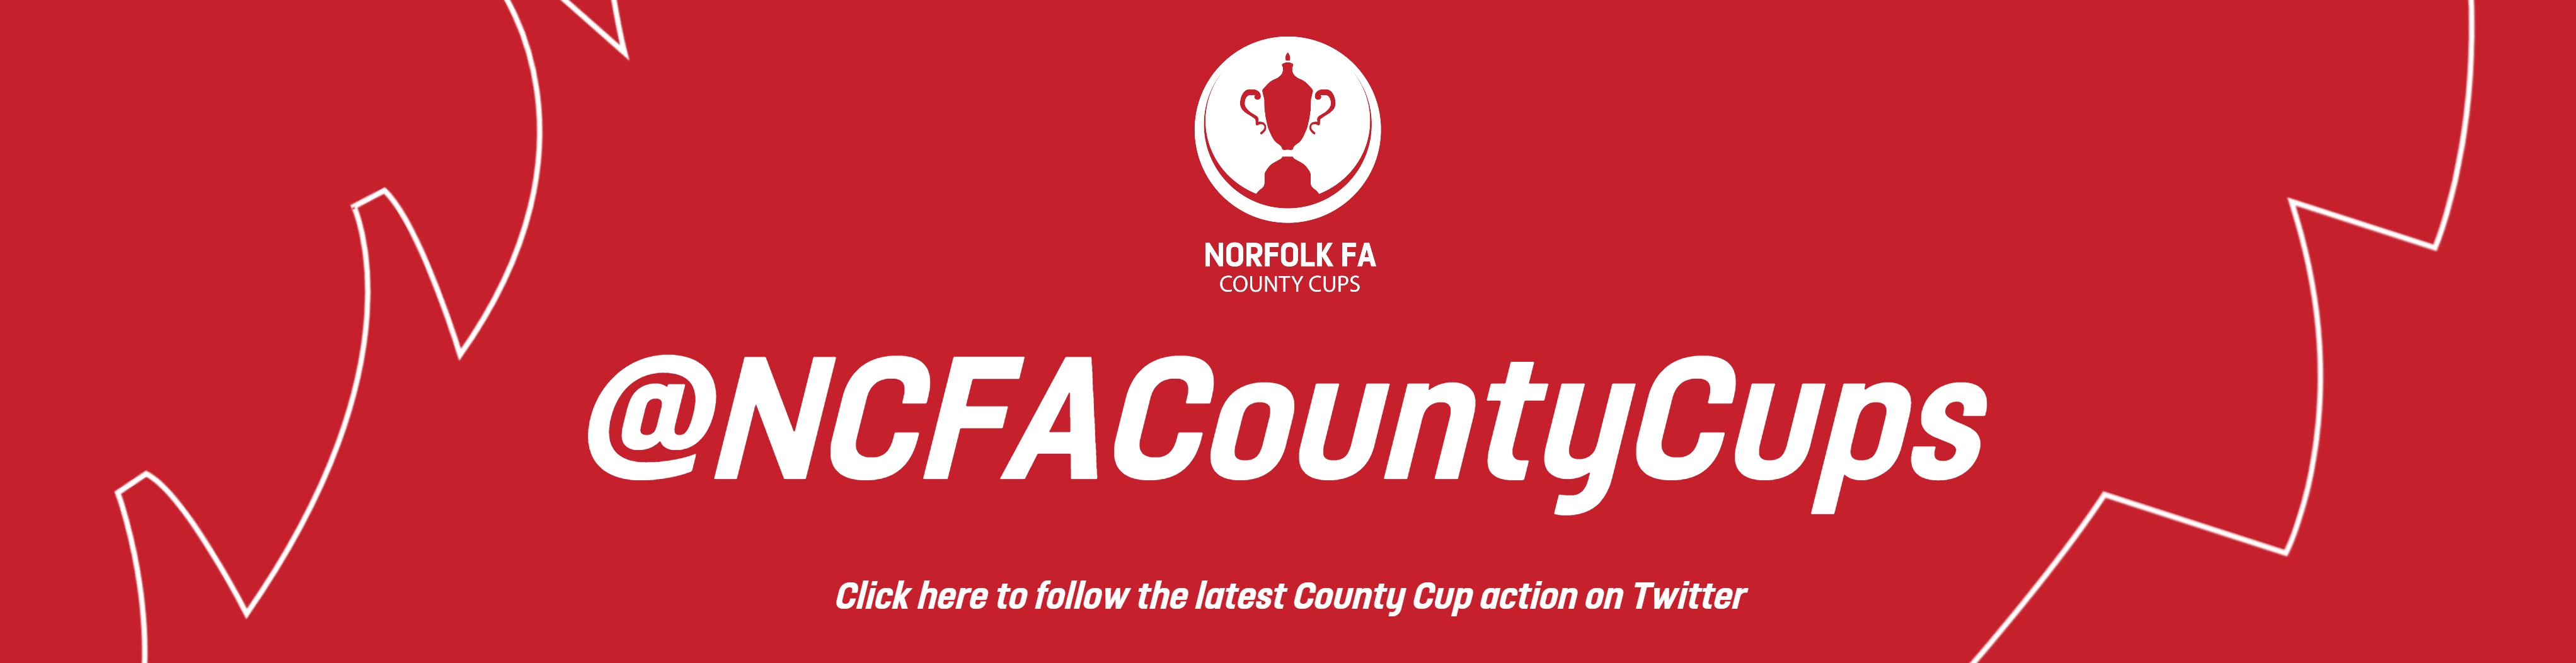 NCFA County Cups Billboard Advert